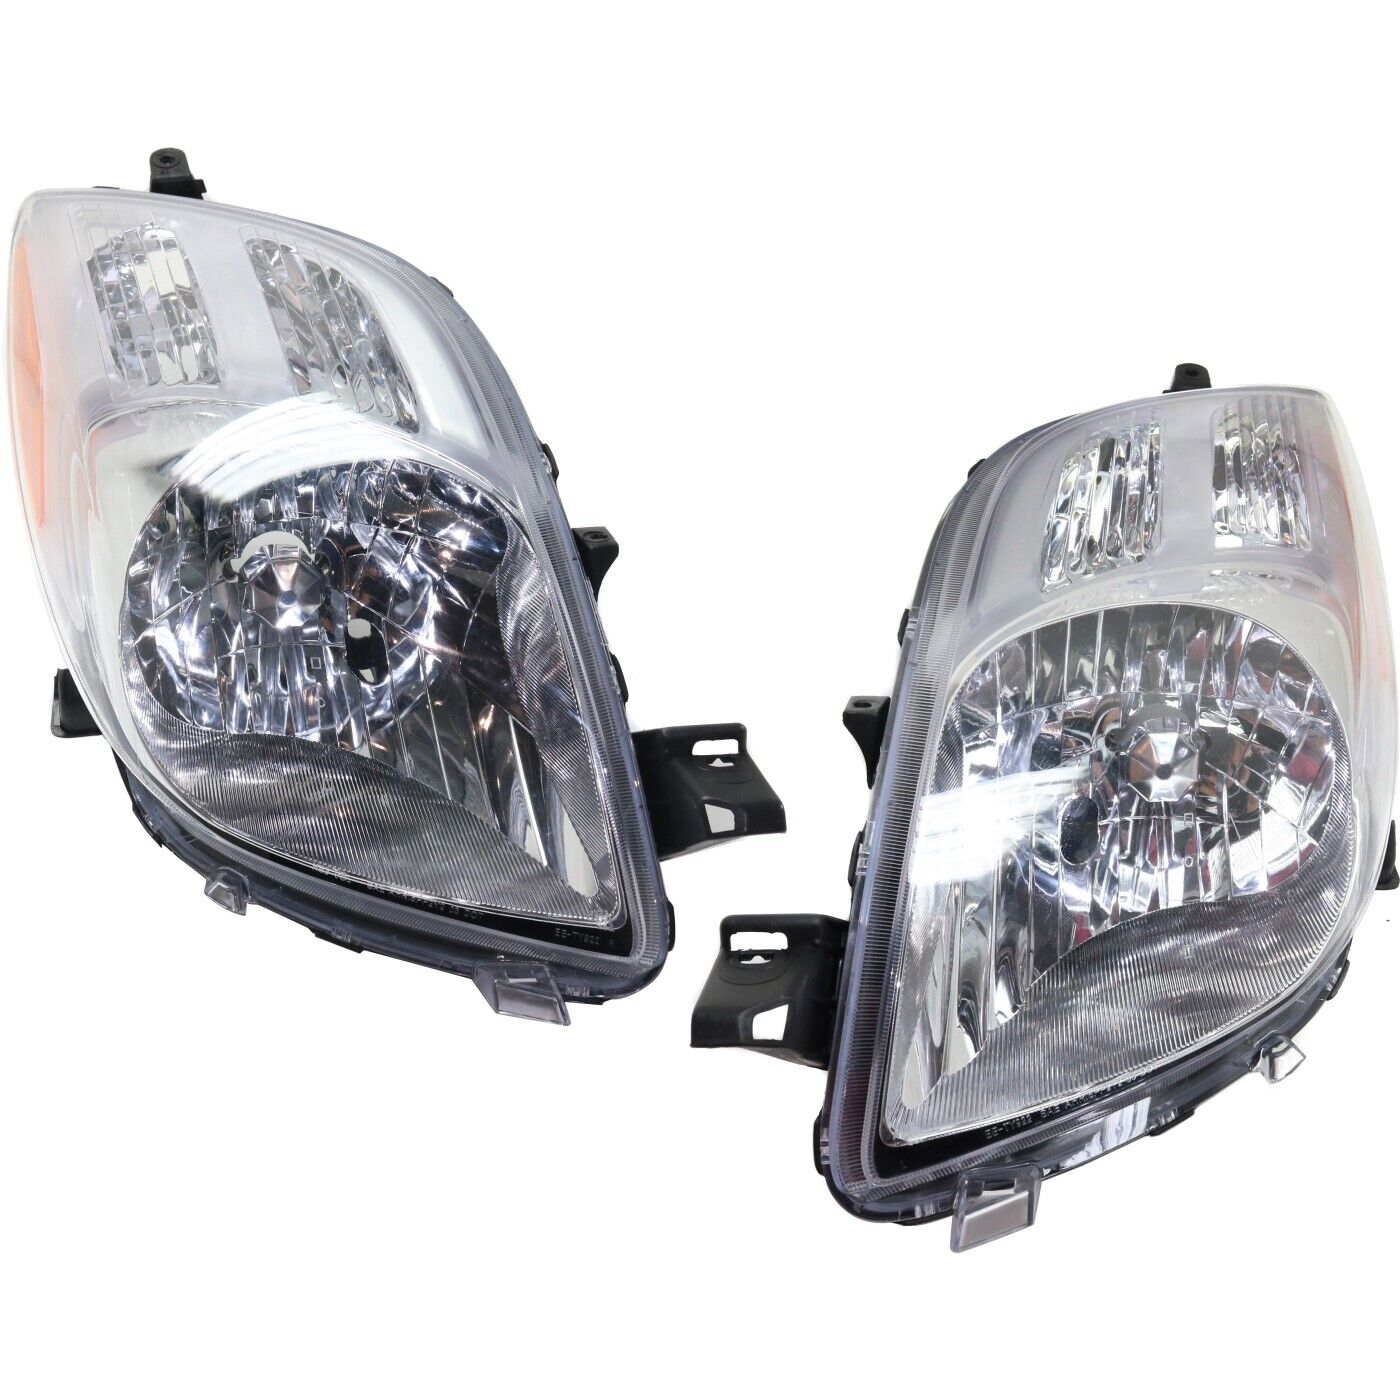 Headlight Headlamp Pair for Toyota Yaris Hatchback 06 07 08